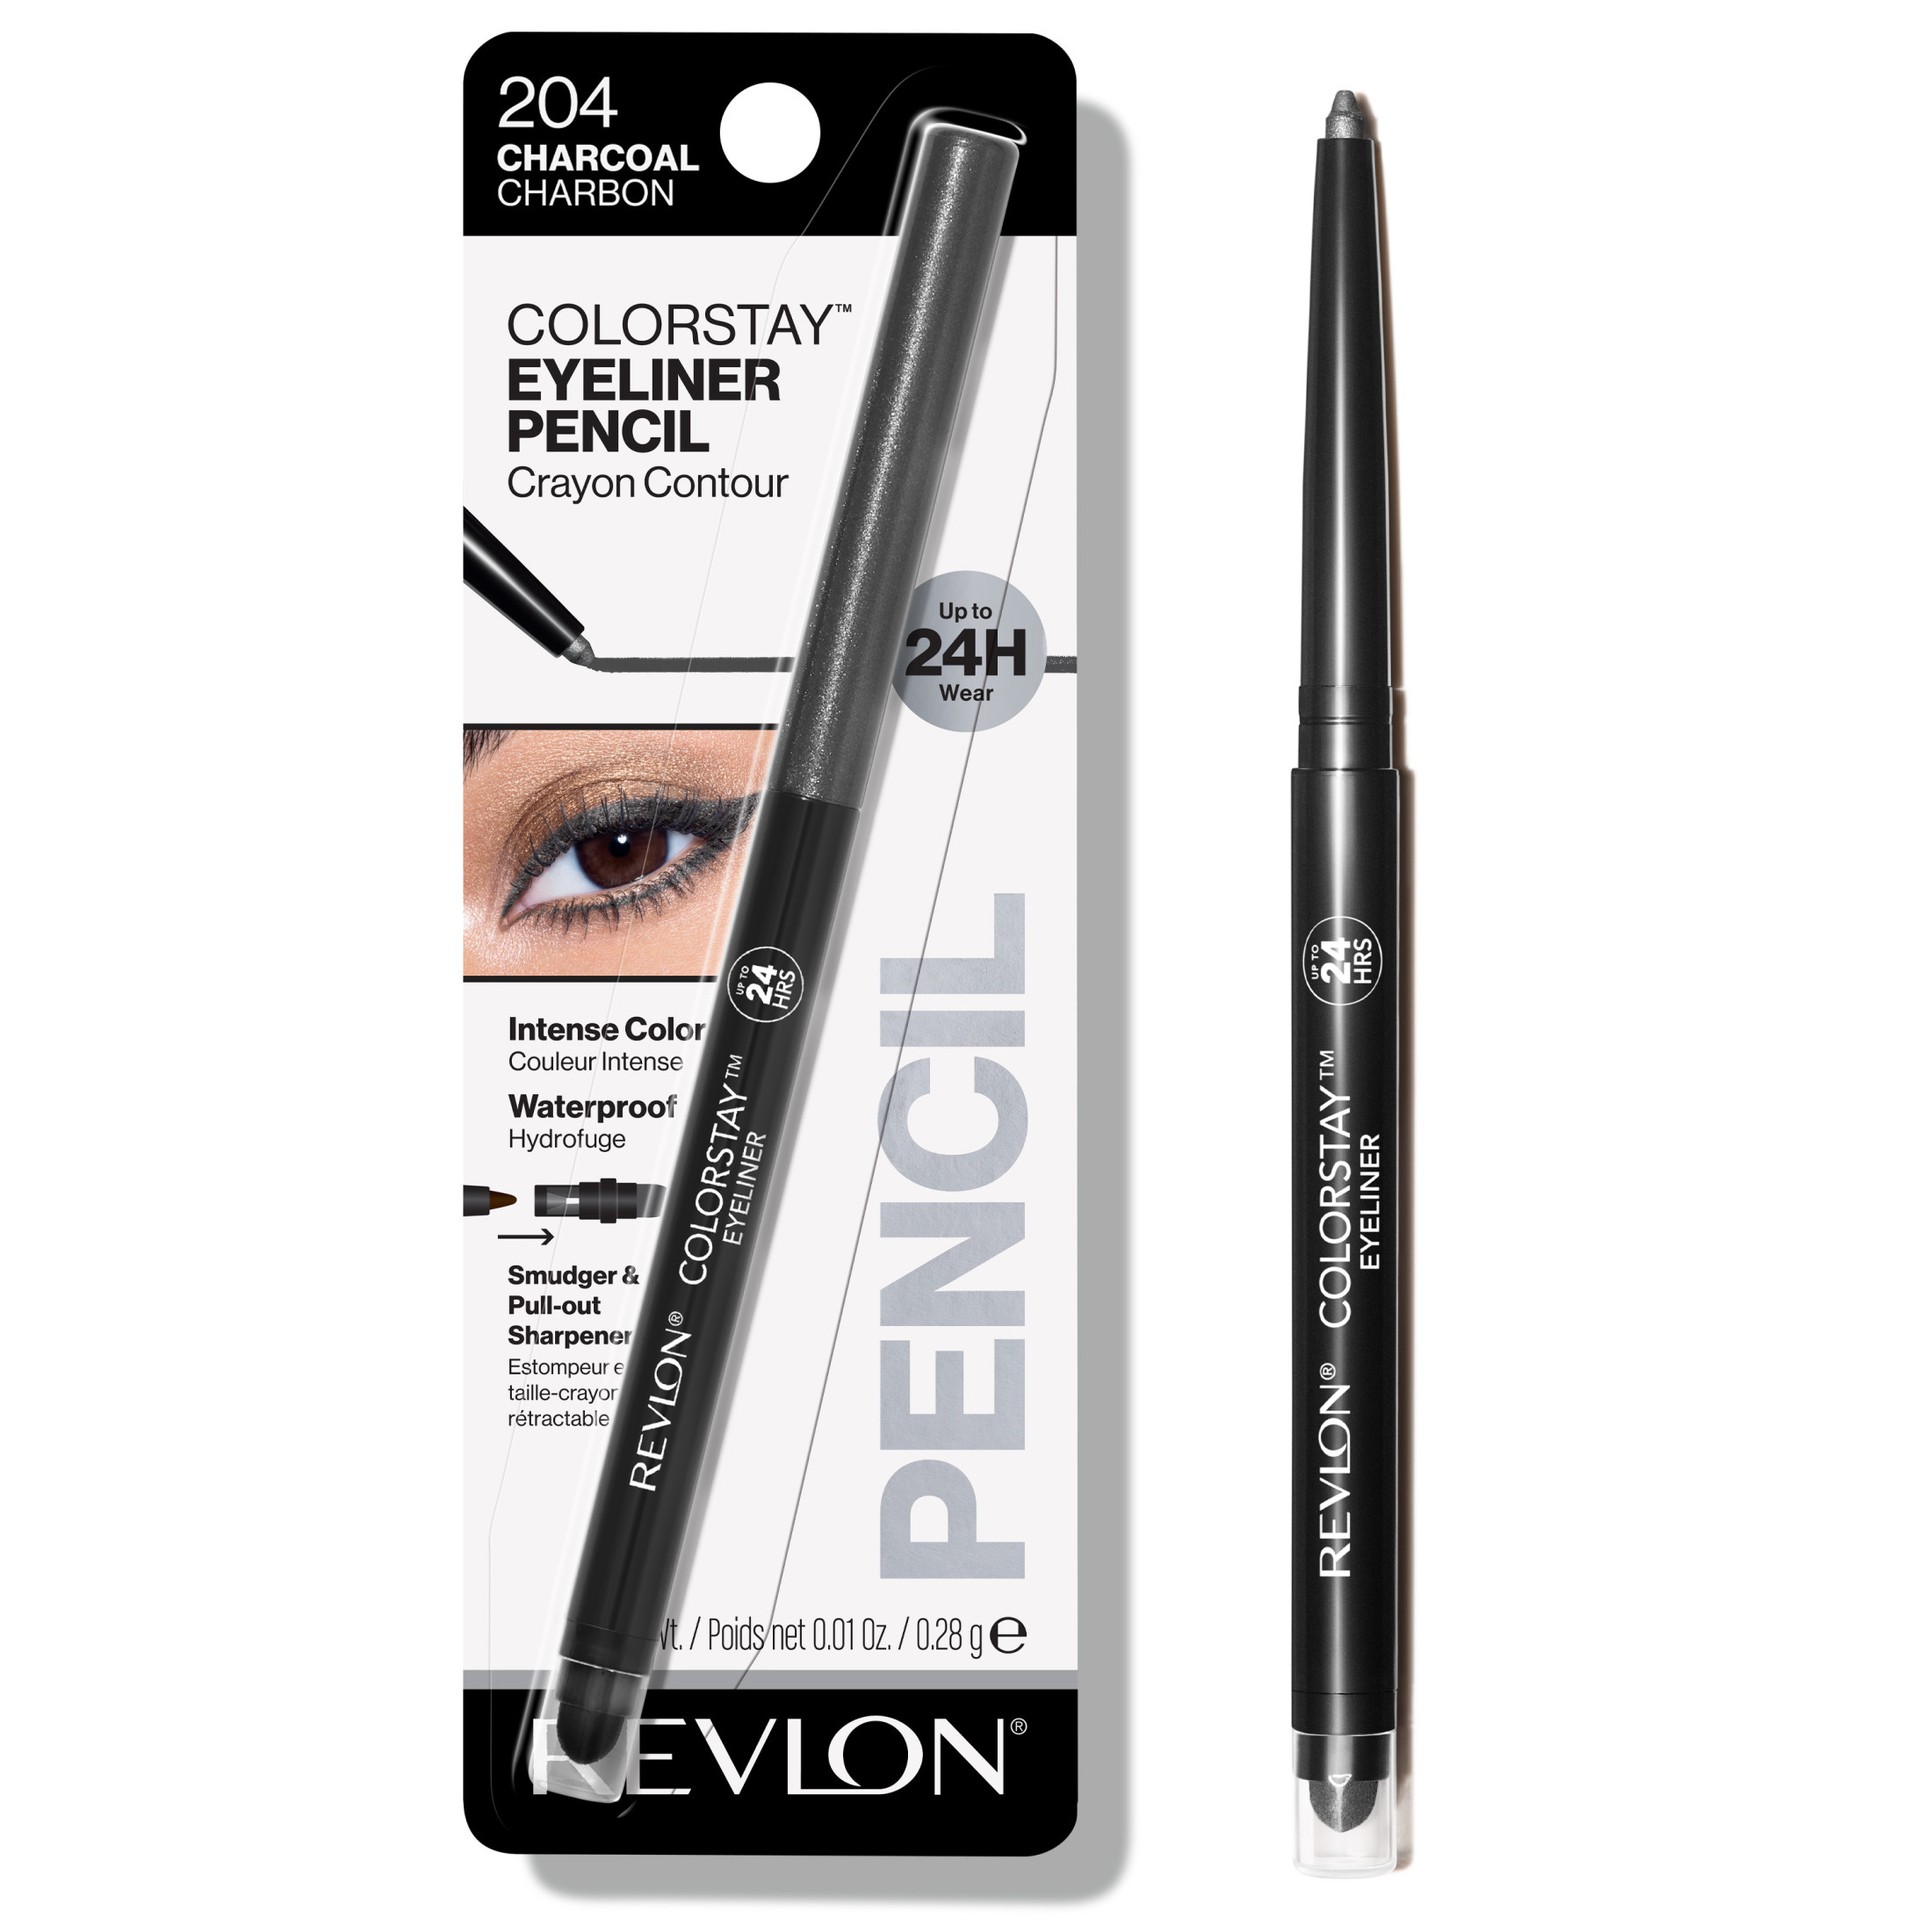 Revlon ColorStay Waterproof Eyeliner Pencil, 24HR Wear, Built-in Sharpener, 204 Charcoal, 0.01 oz - image 1 of 9